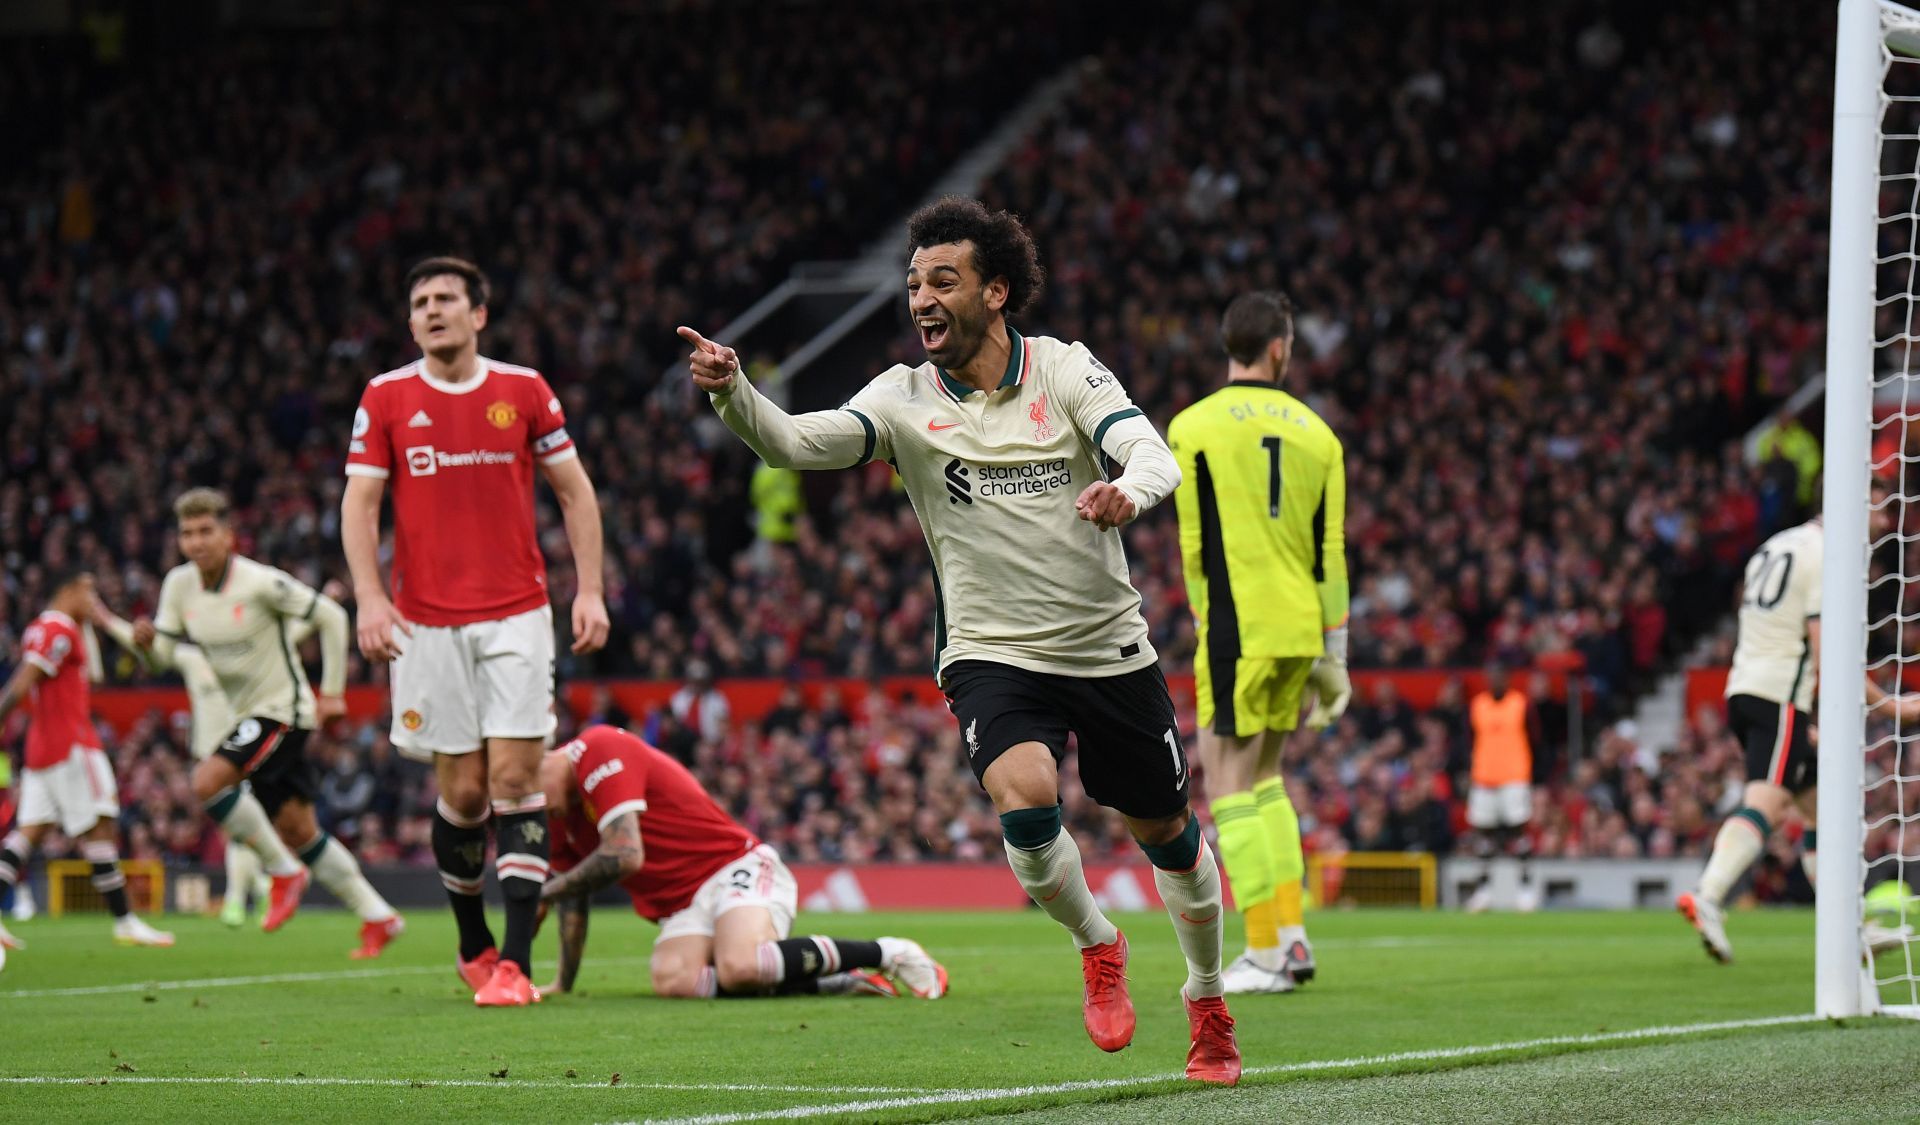 Mohamed Salah celebrates after scoring a goal against Manchester United - Premier League